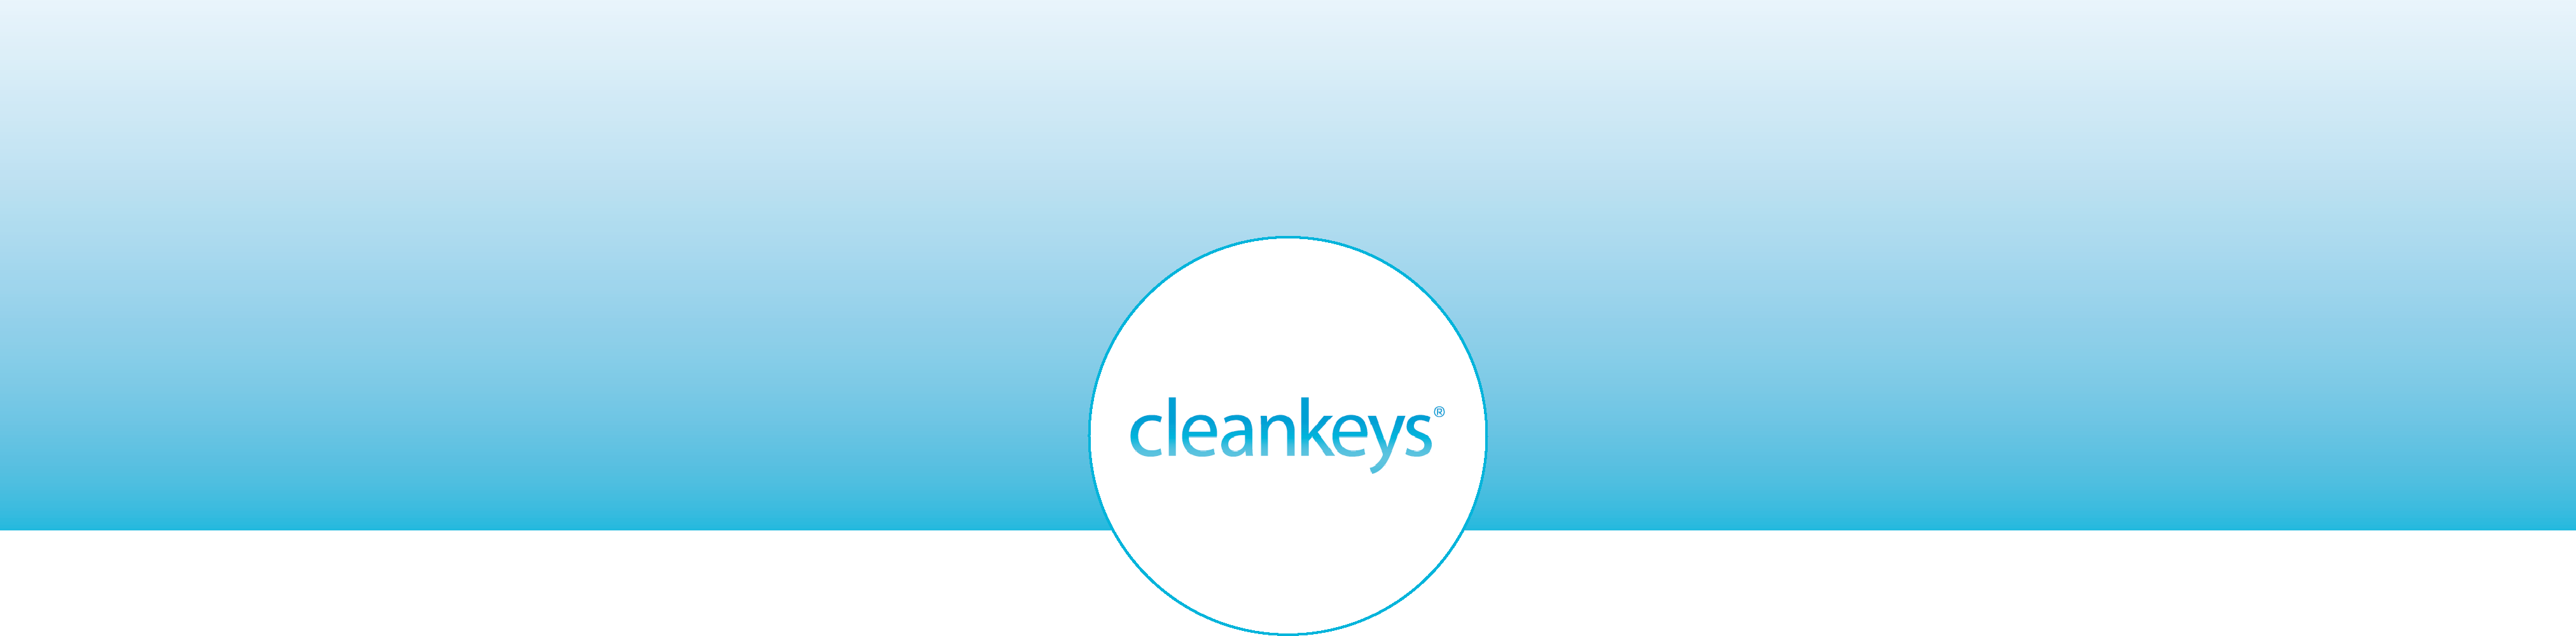 banner_cleankeys